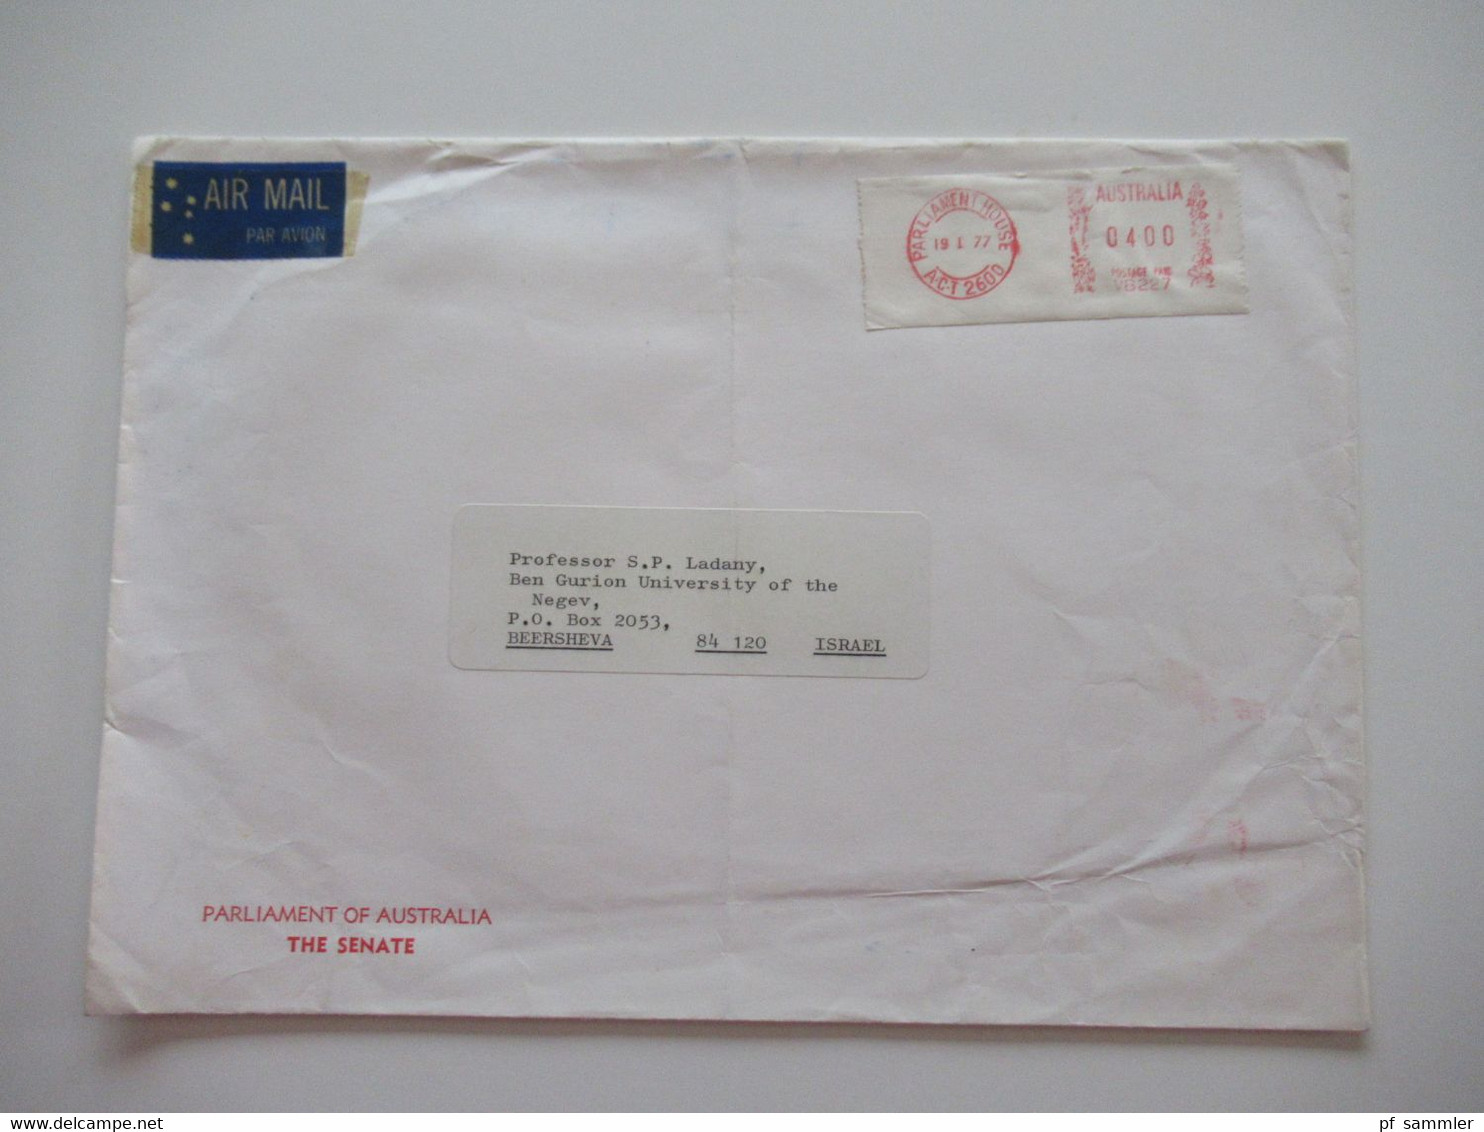 Australien 1977 Air Mail Nach Israel Umschlag Parliament Of Australia The Senate Postage Paid Parliament House ACT 2600 - Cartas & Documentos